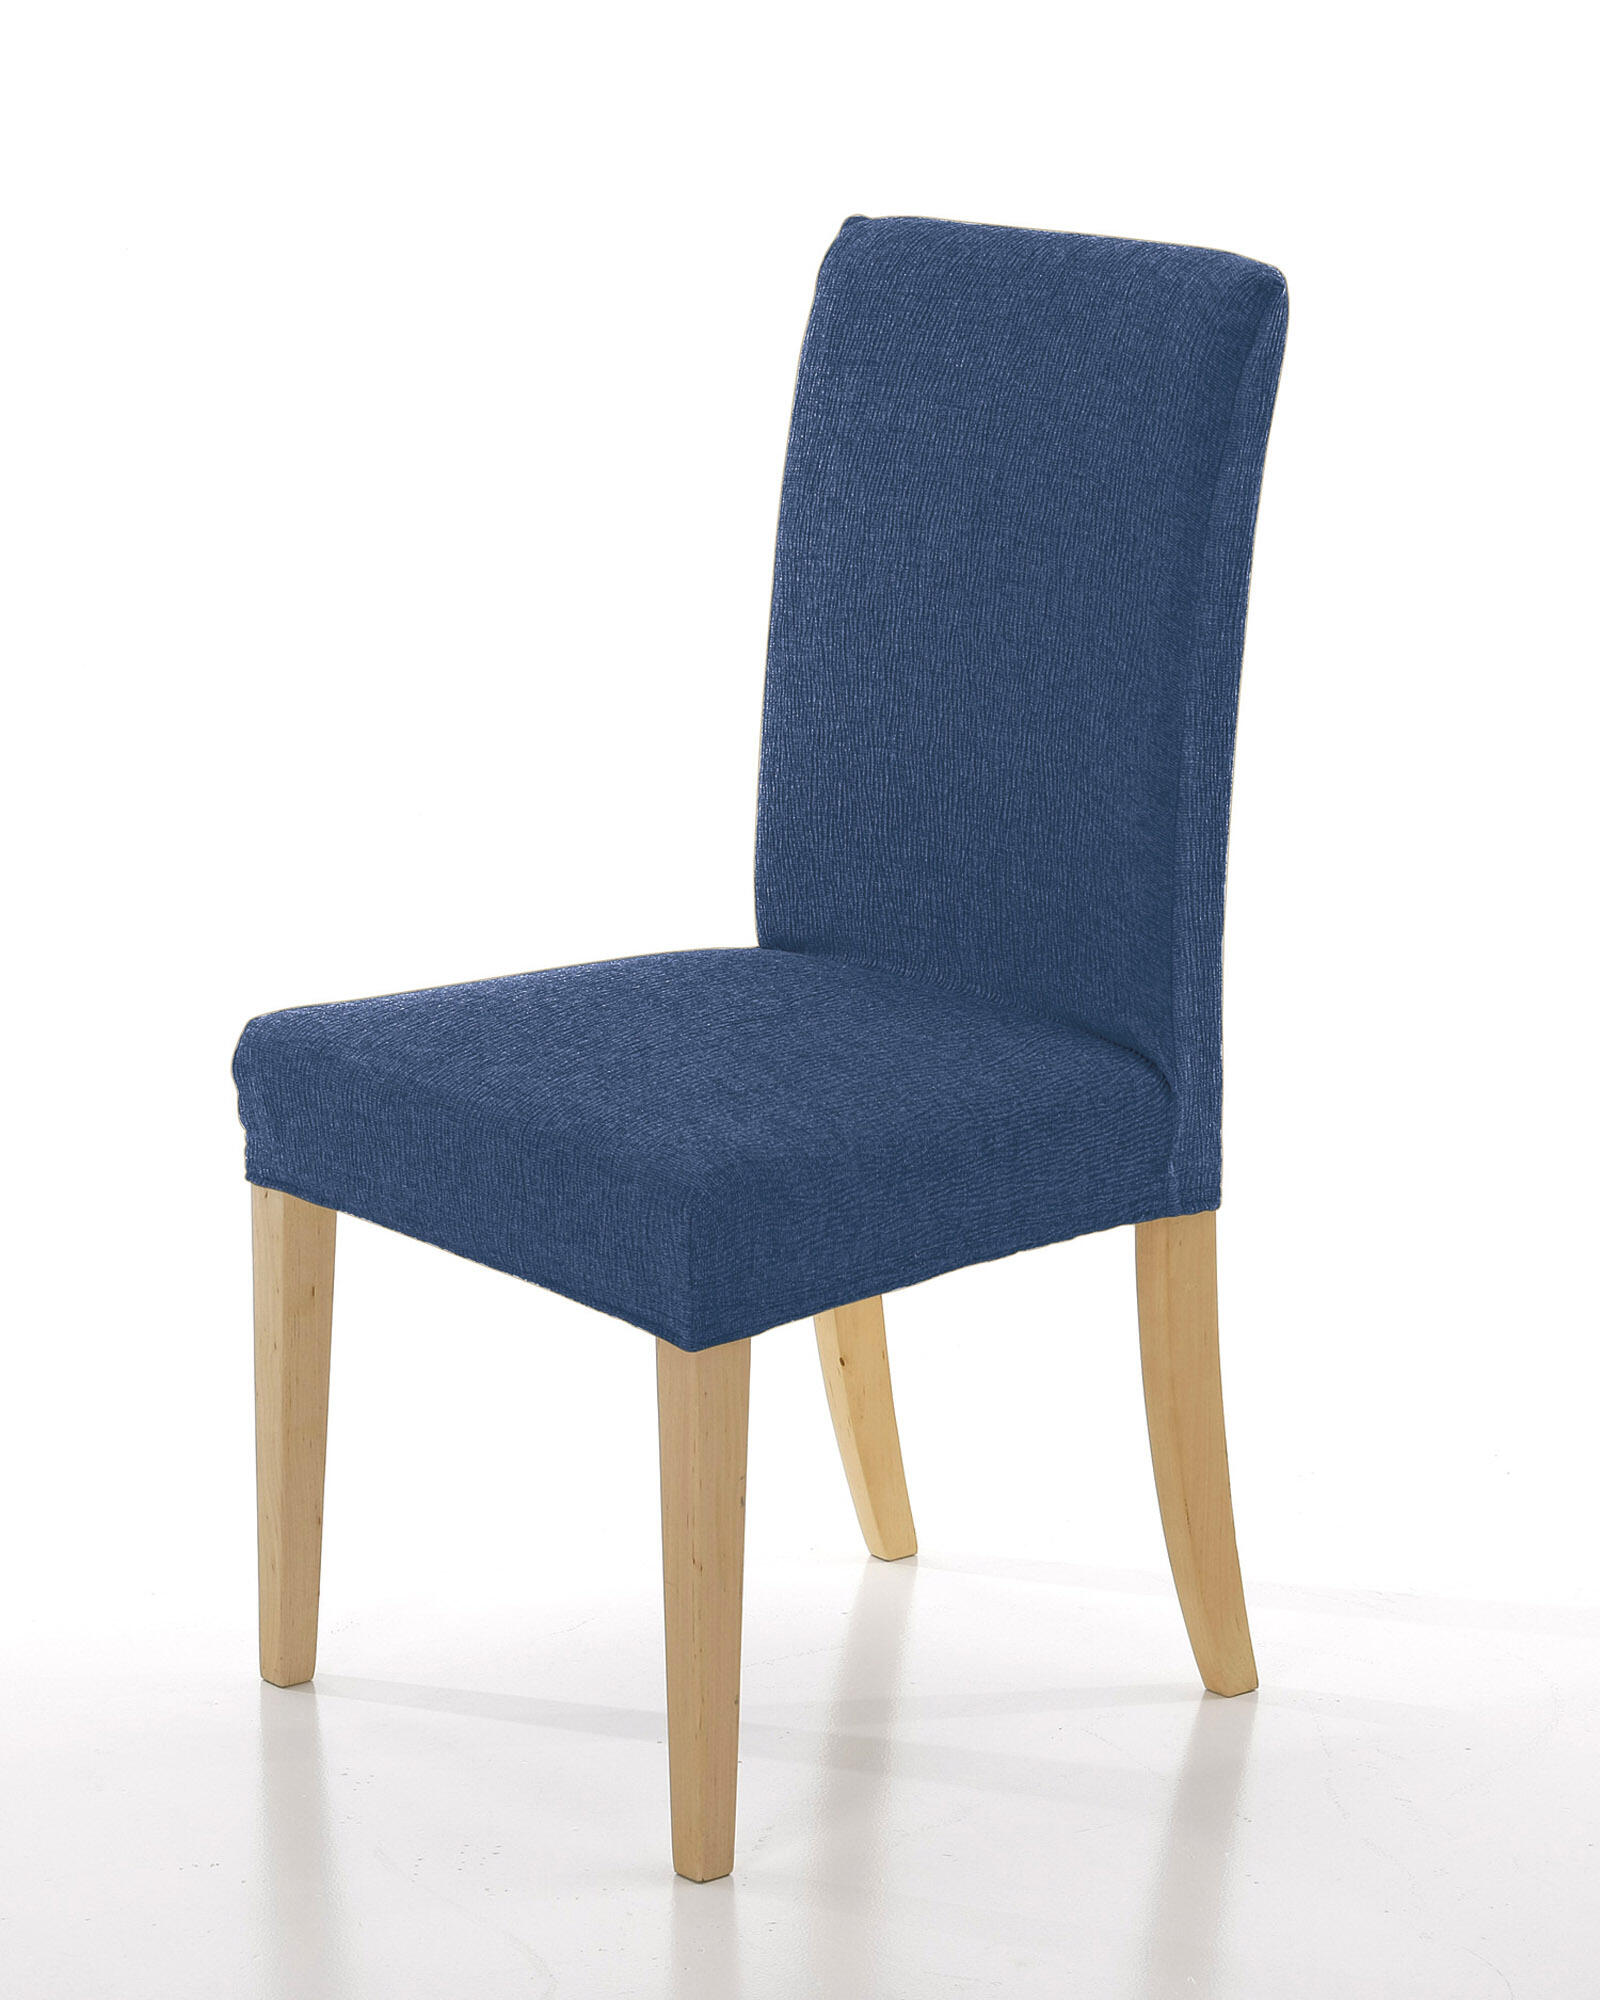 Funda elástica silla enzo azul pack 2 resp. 50 cms